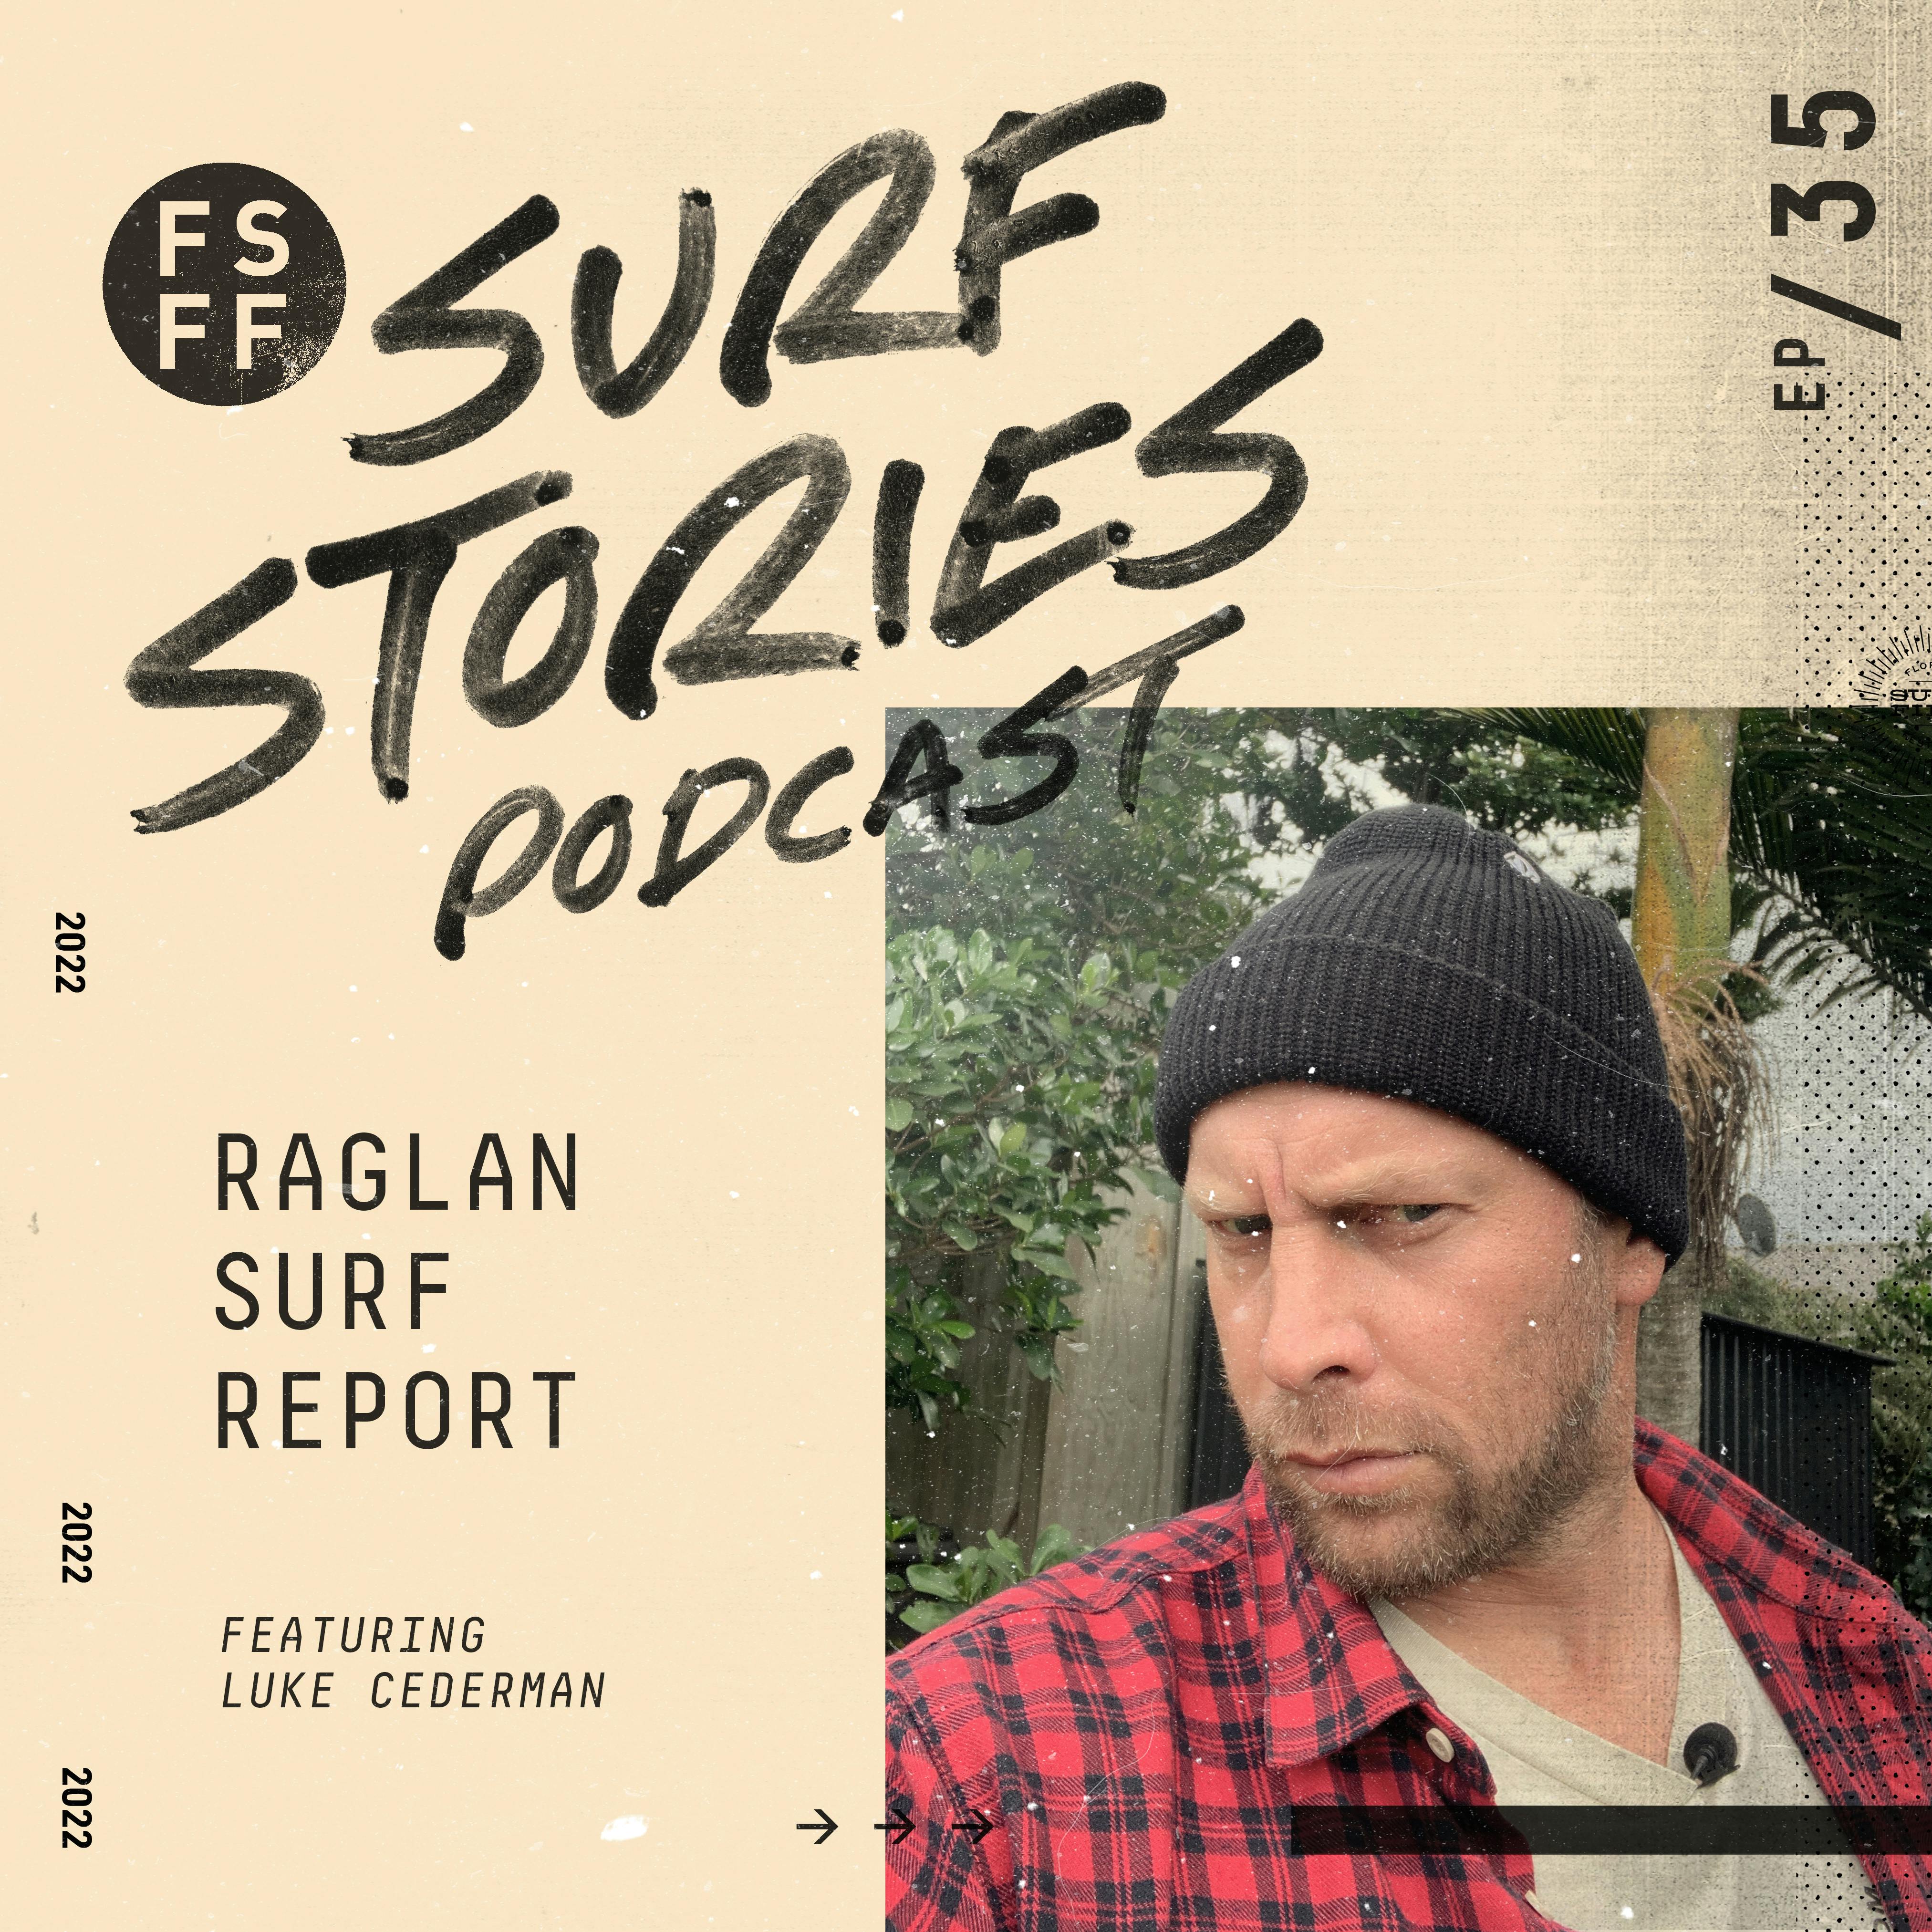 Raglan Surf Report with Luke Cedarman